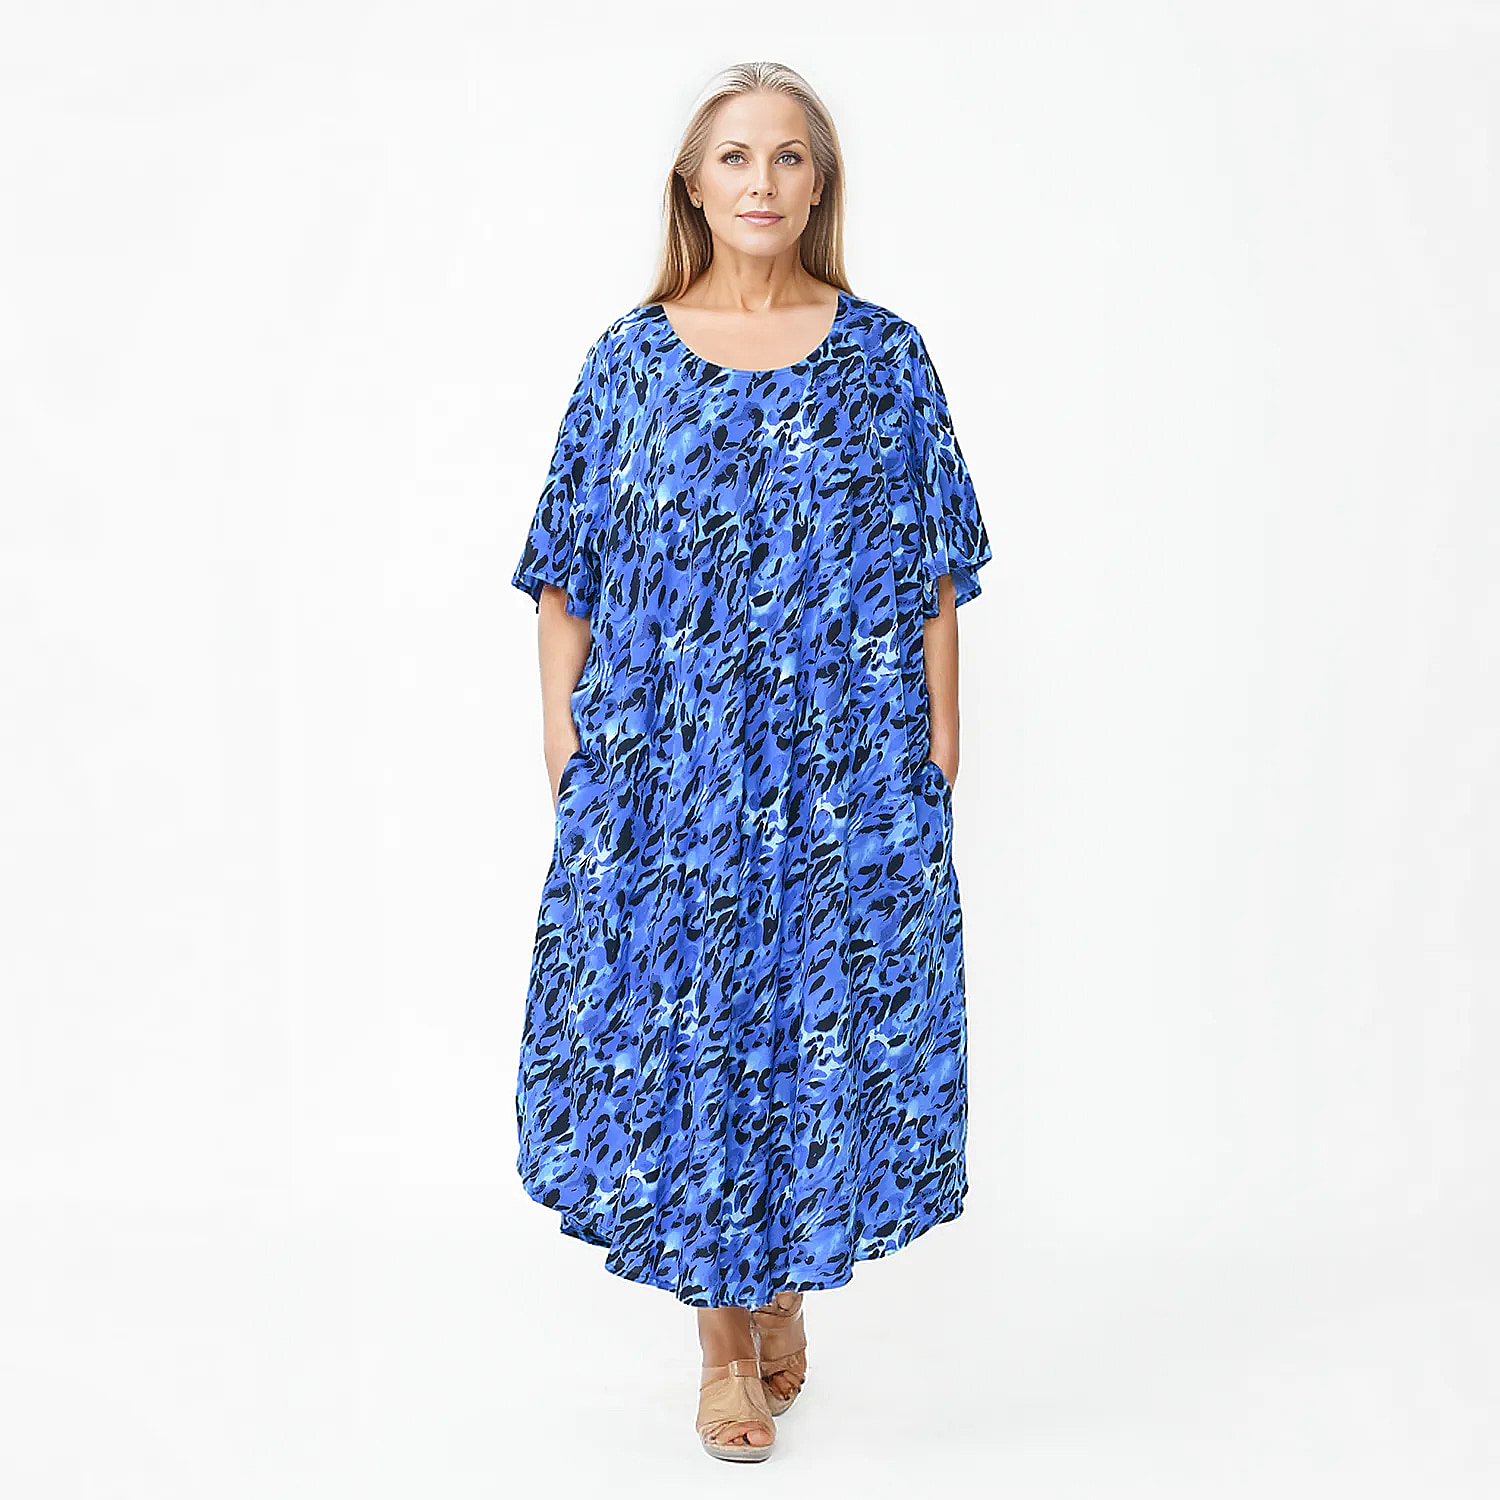 Tamsy 100% Viscose Leaf Printed Dress - Blue Curve